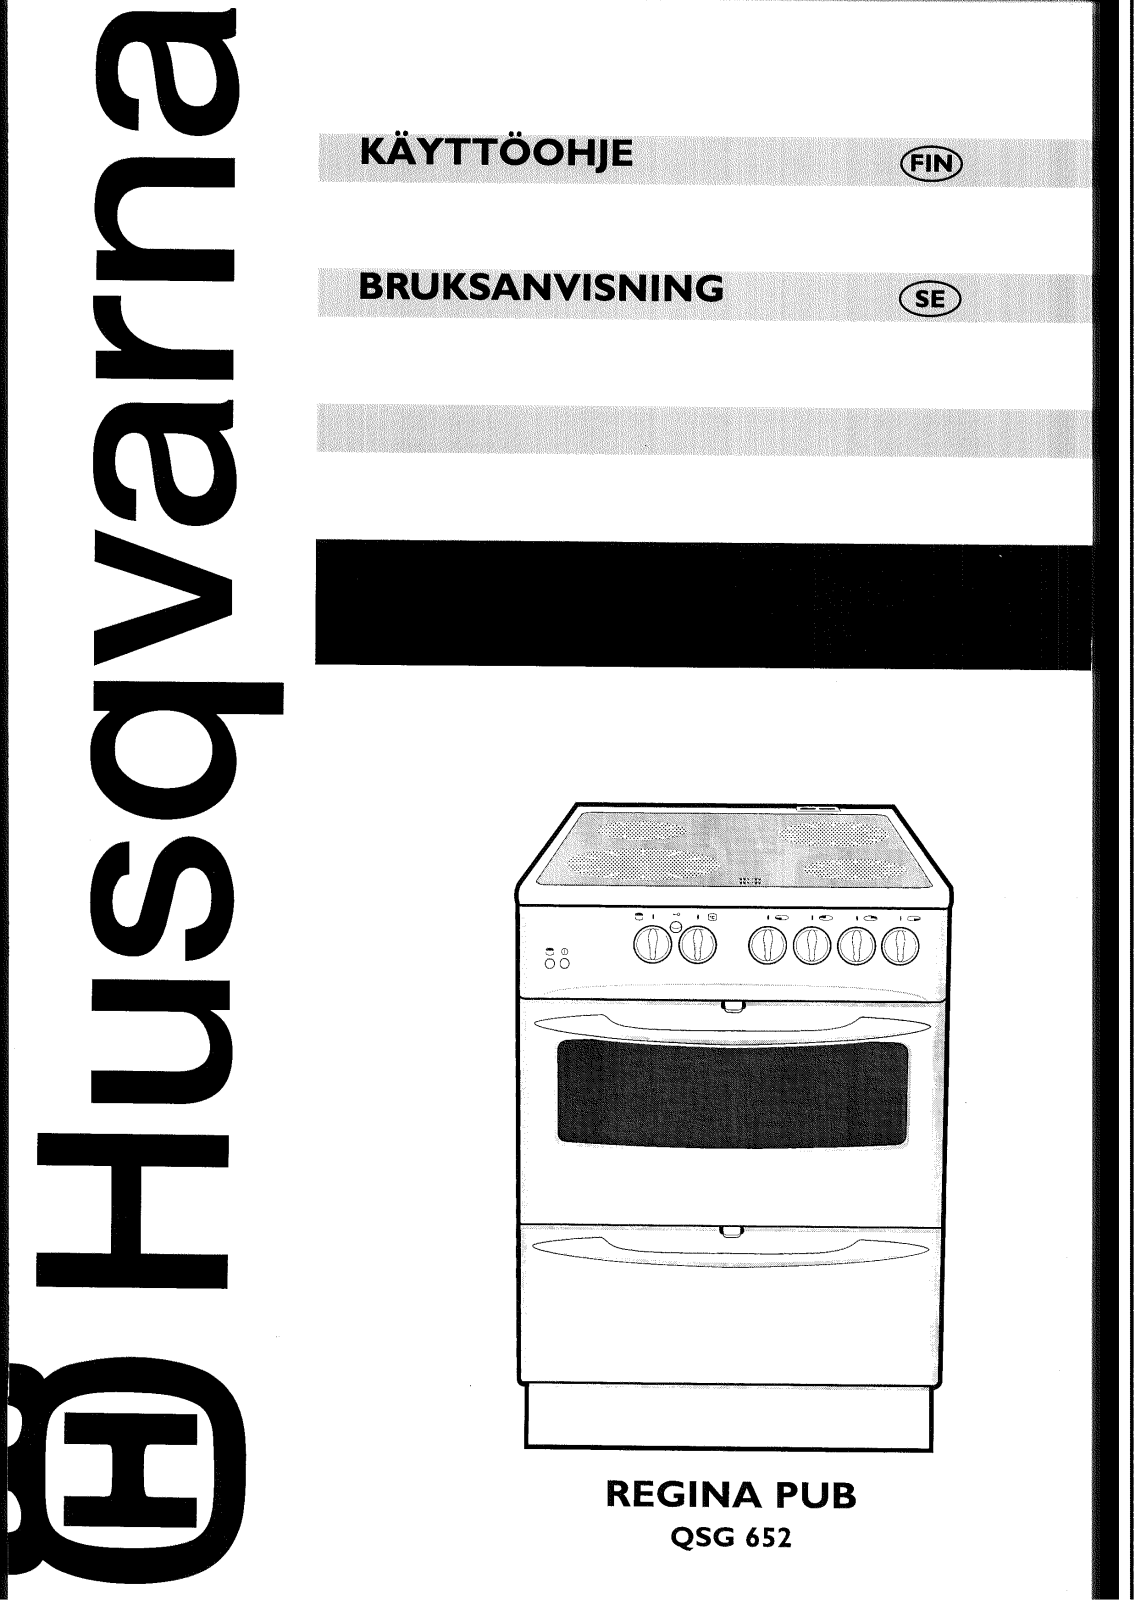 Husqvarna QSG652 User Manual